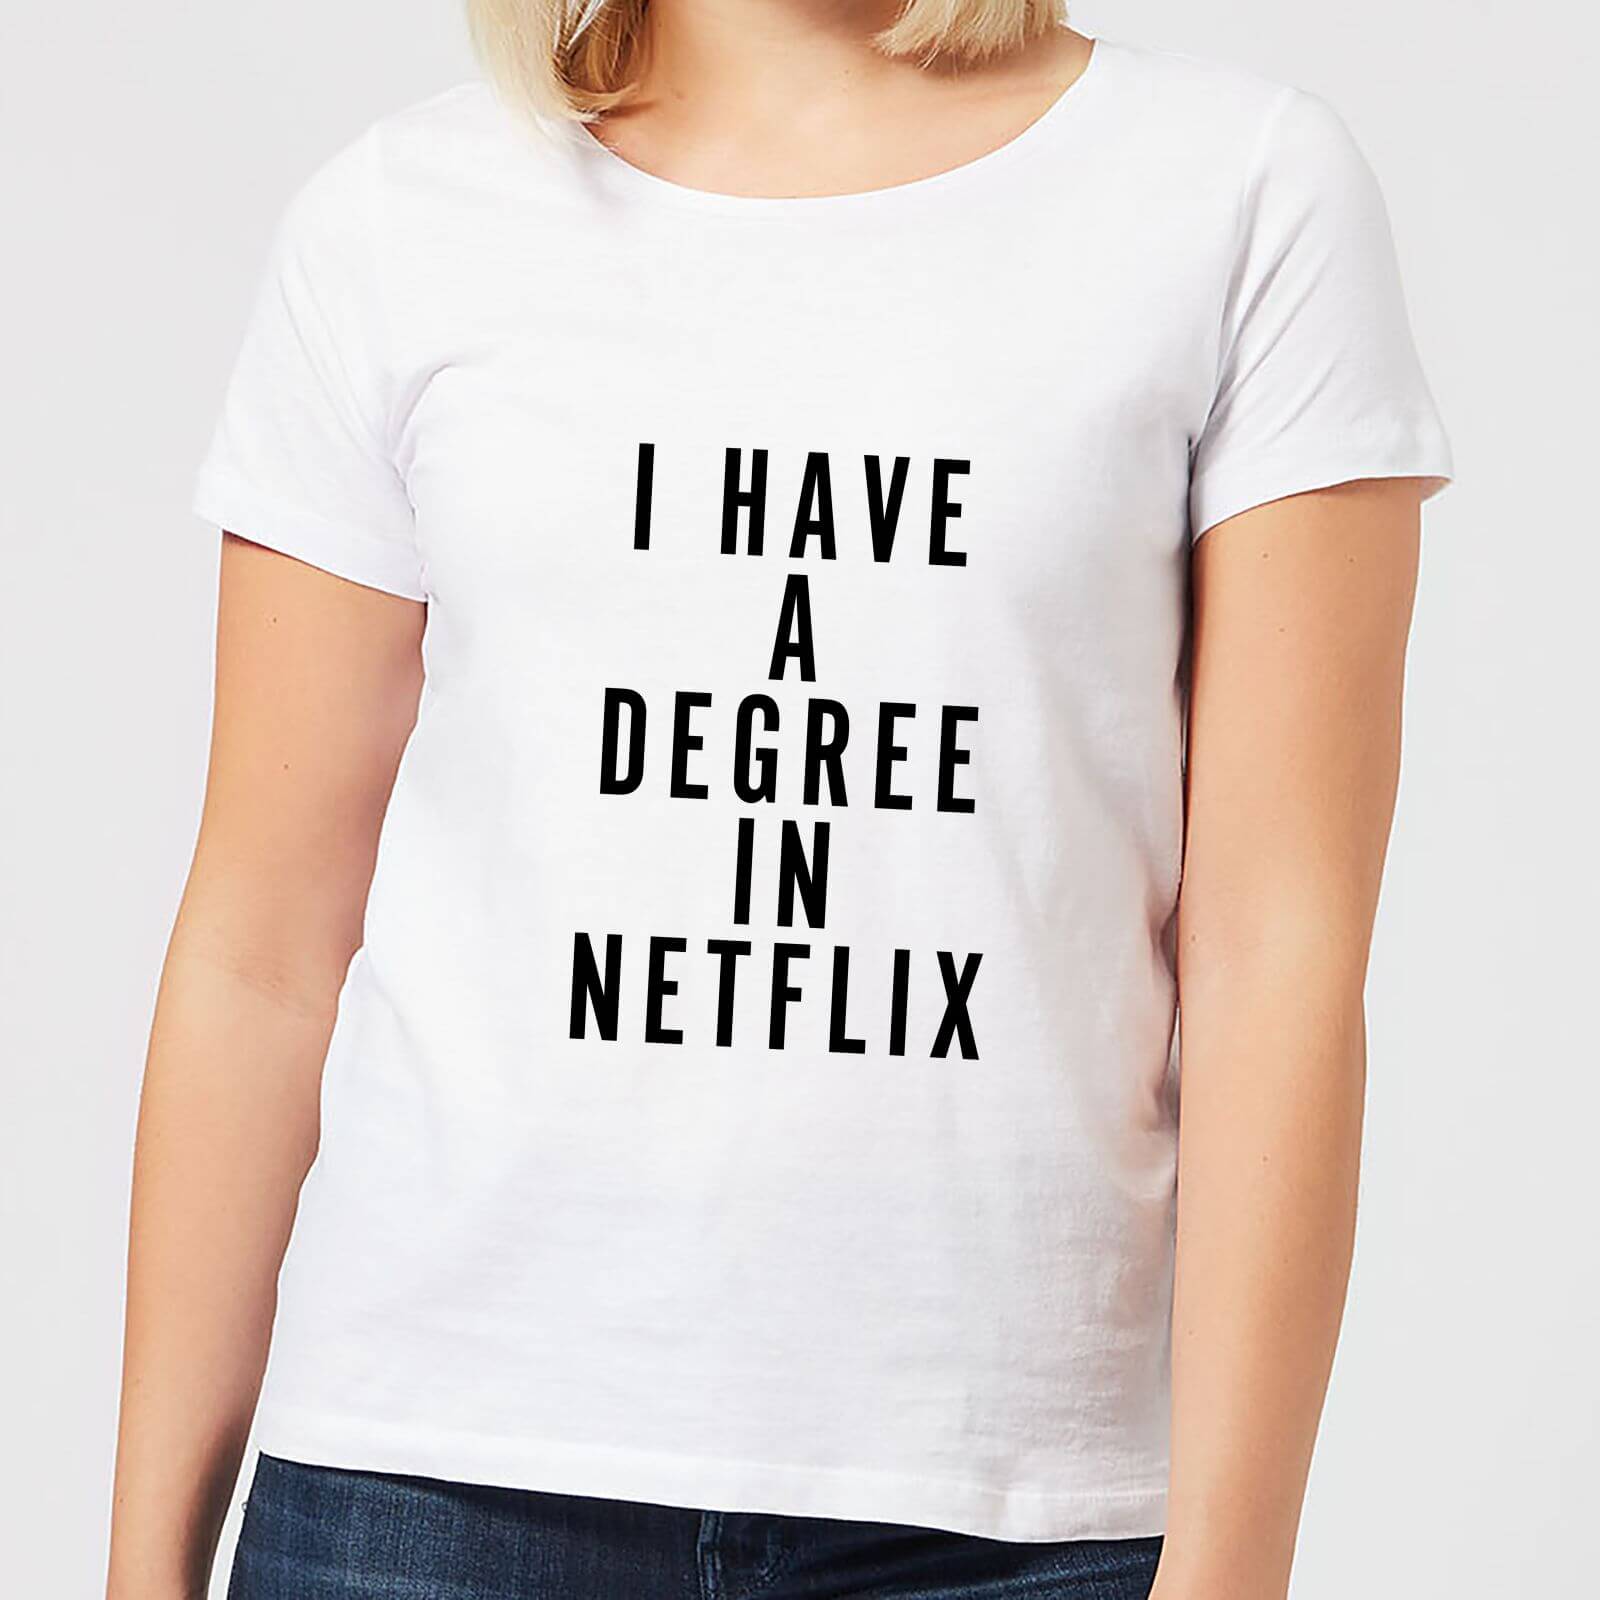 I Have A Degree In Netflix Women's T-Shirt - White - S - White